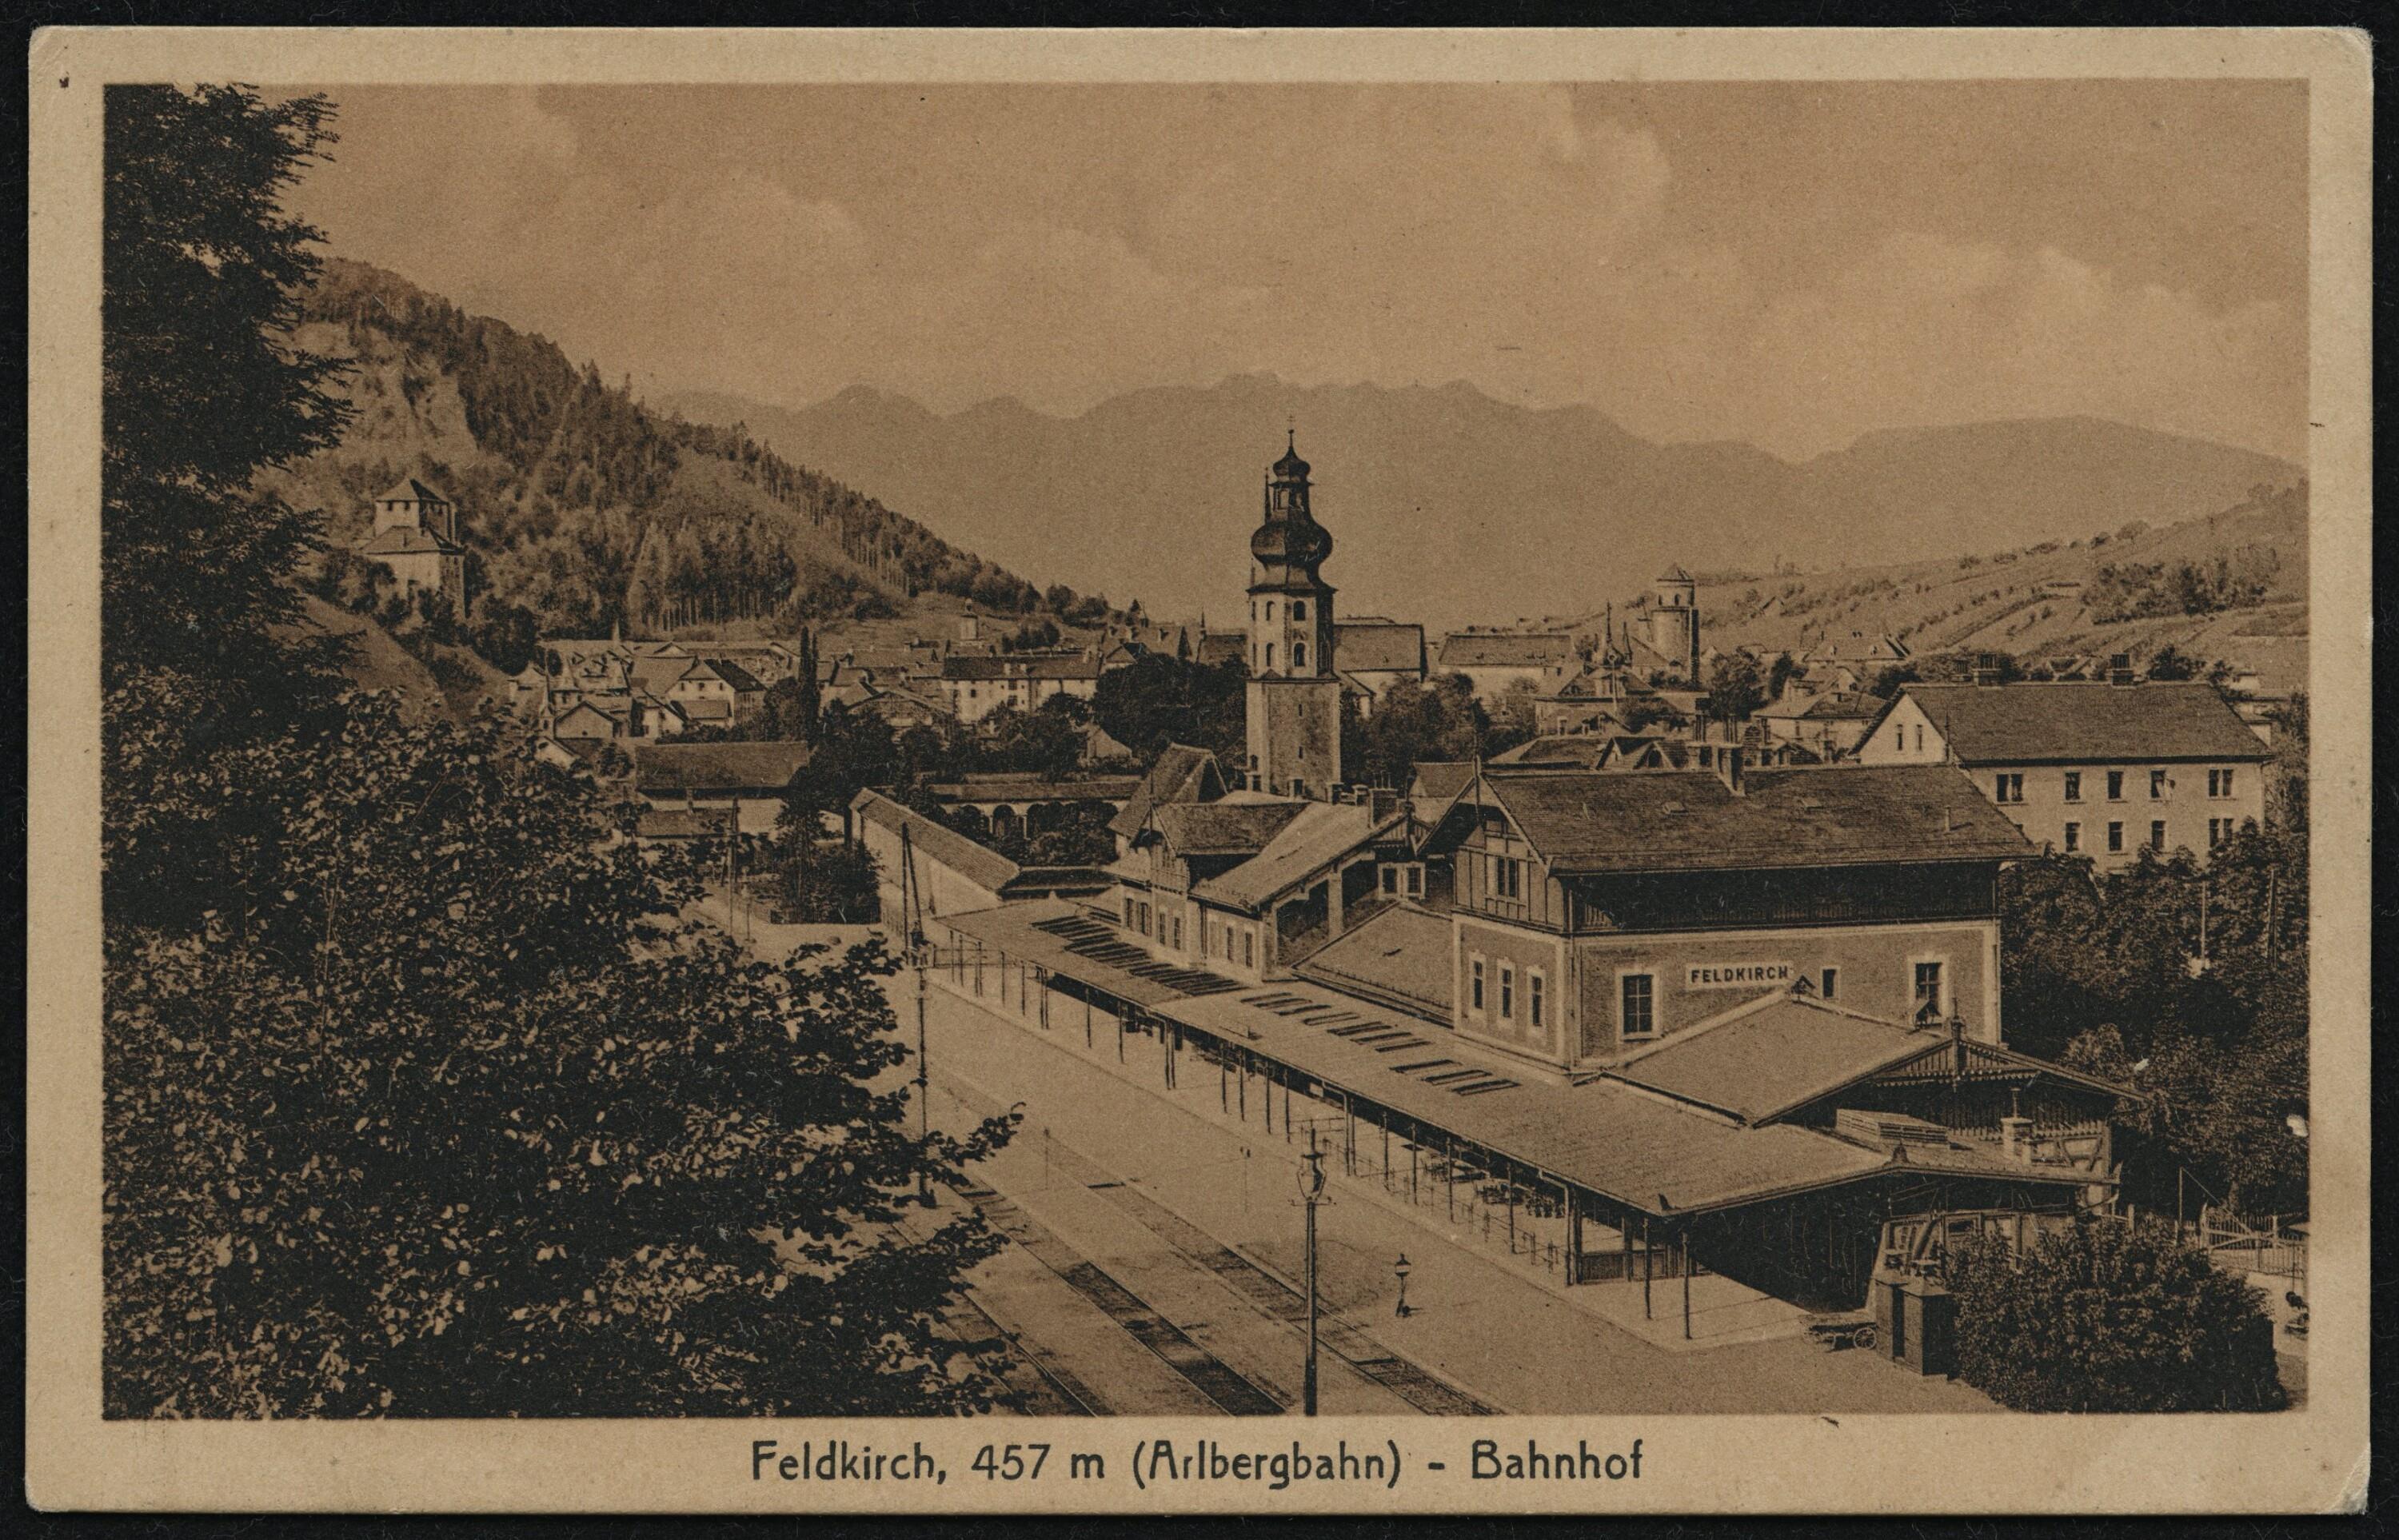 Feldkirch, 457 m (Arlbergbahn) - Bahnhof></div>


    <hr>
    <div class=